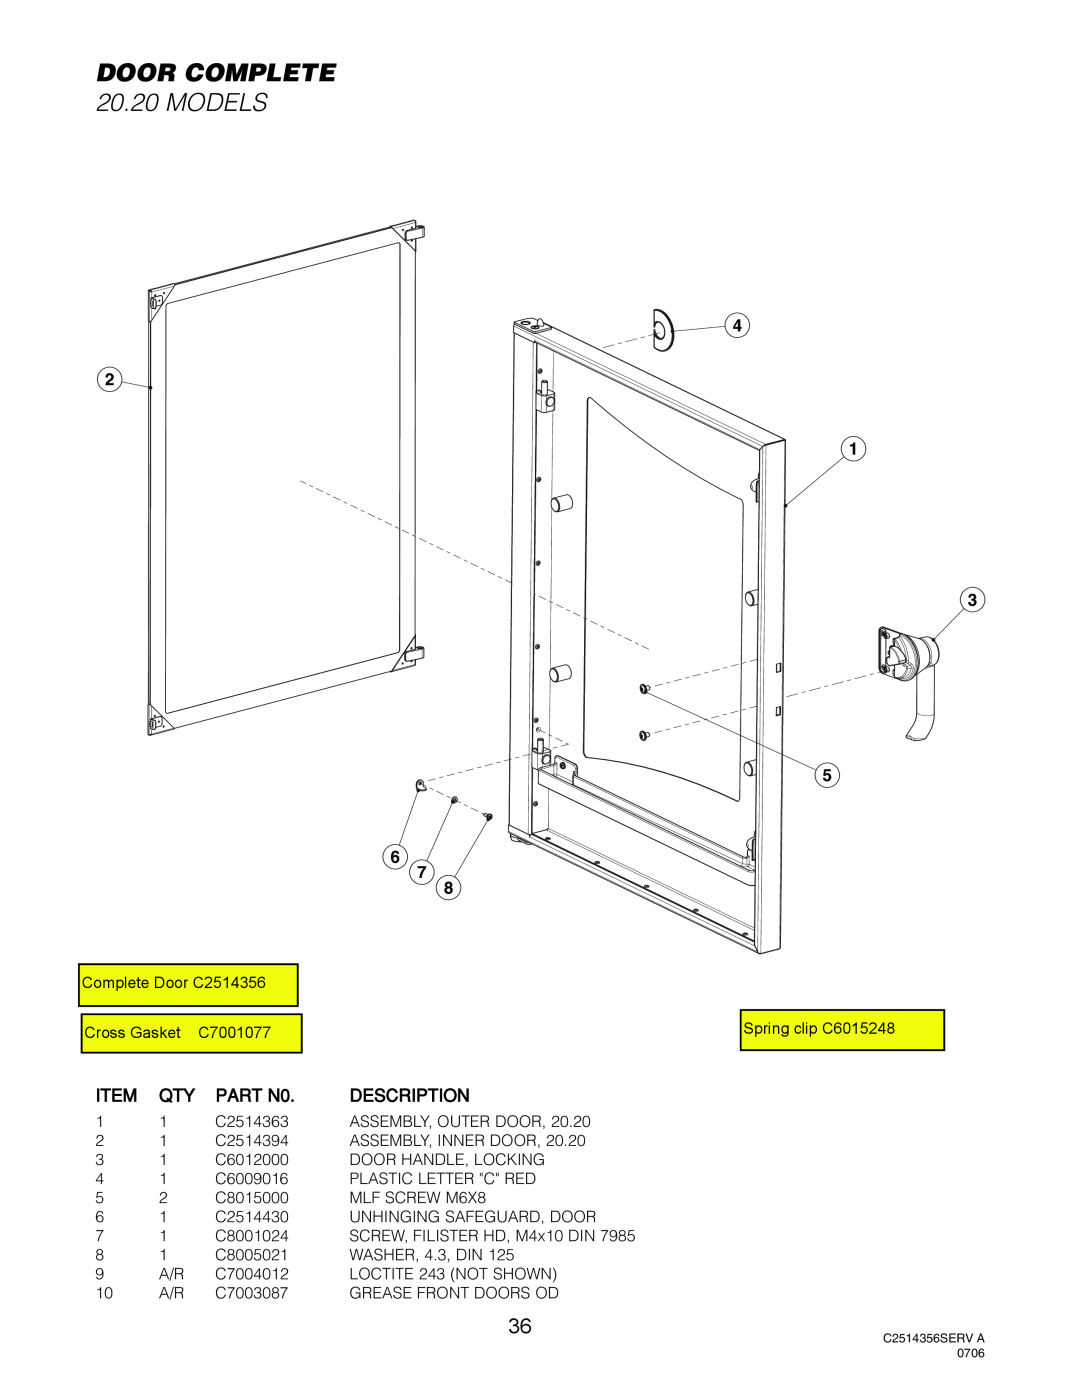 Cleveland Range OEB-20.20, OES-20.20 manual Door Complete, Models, 4 1 3 5 